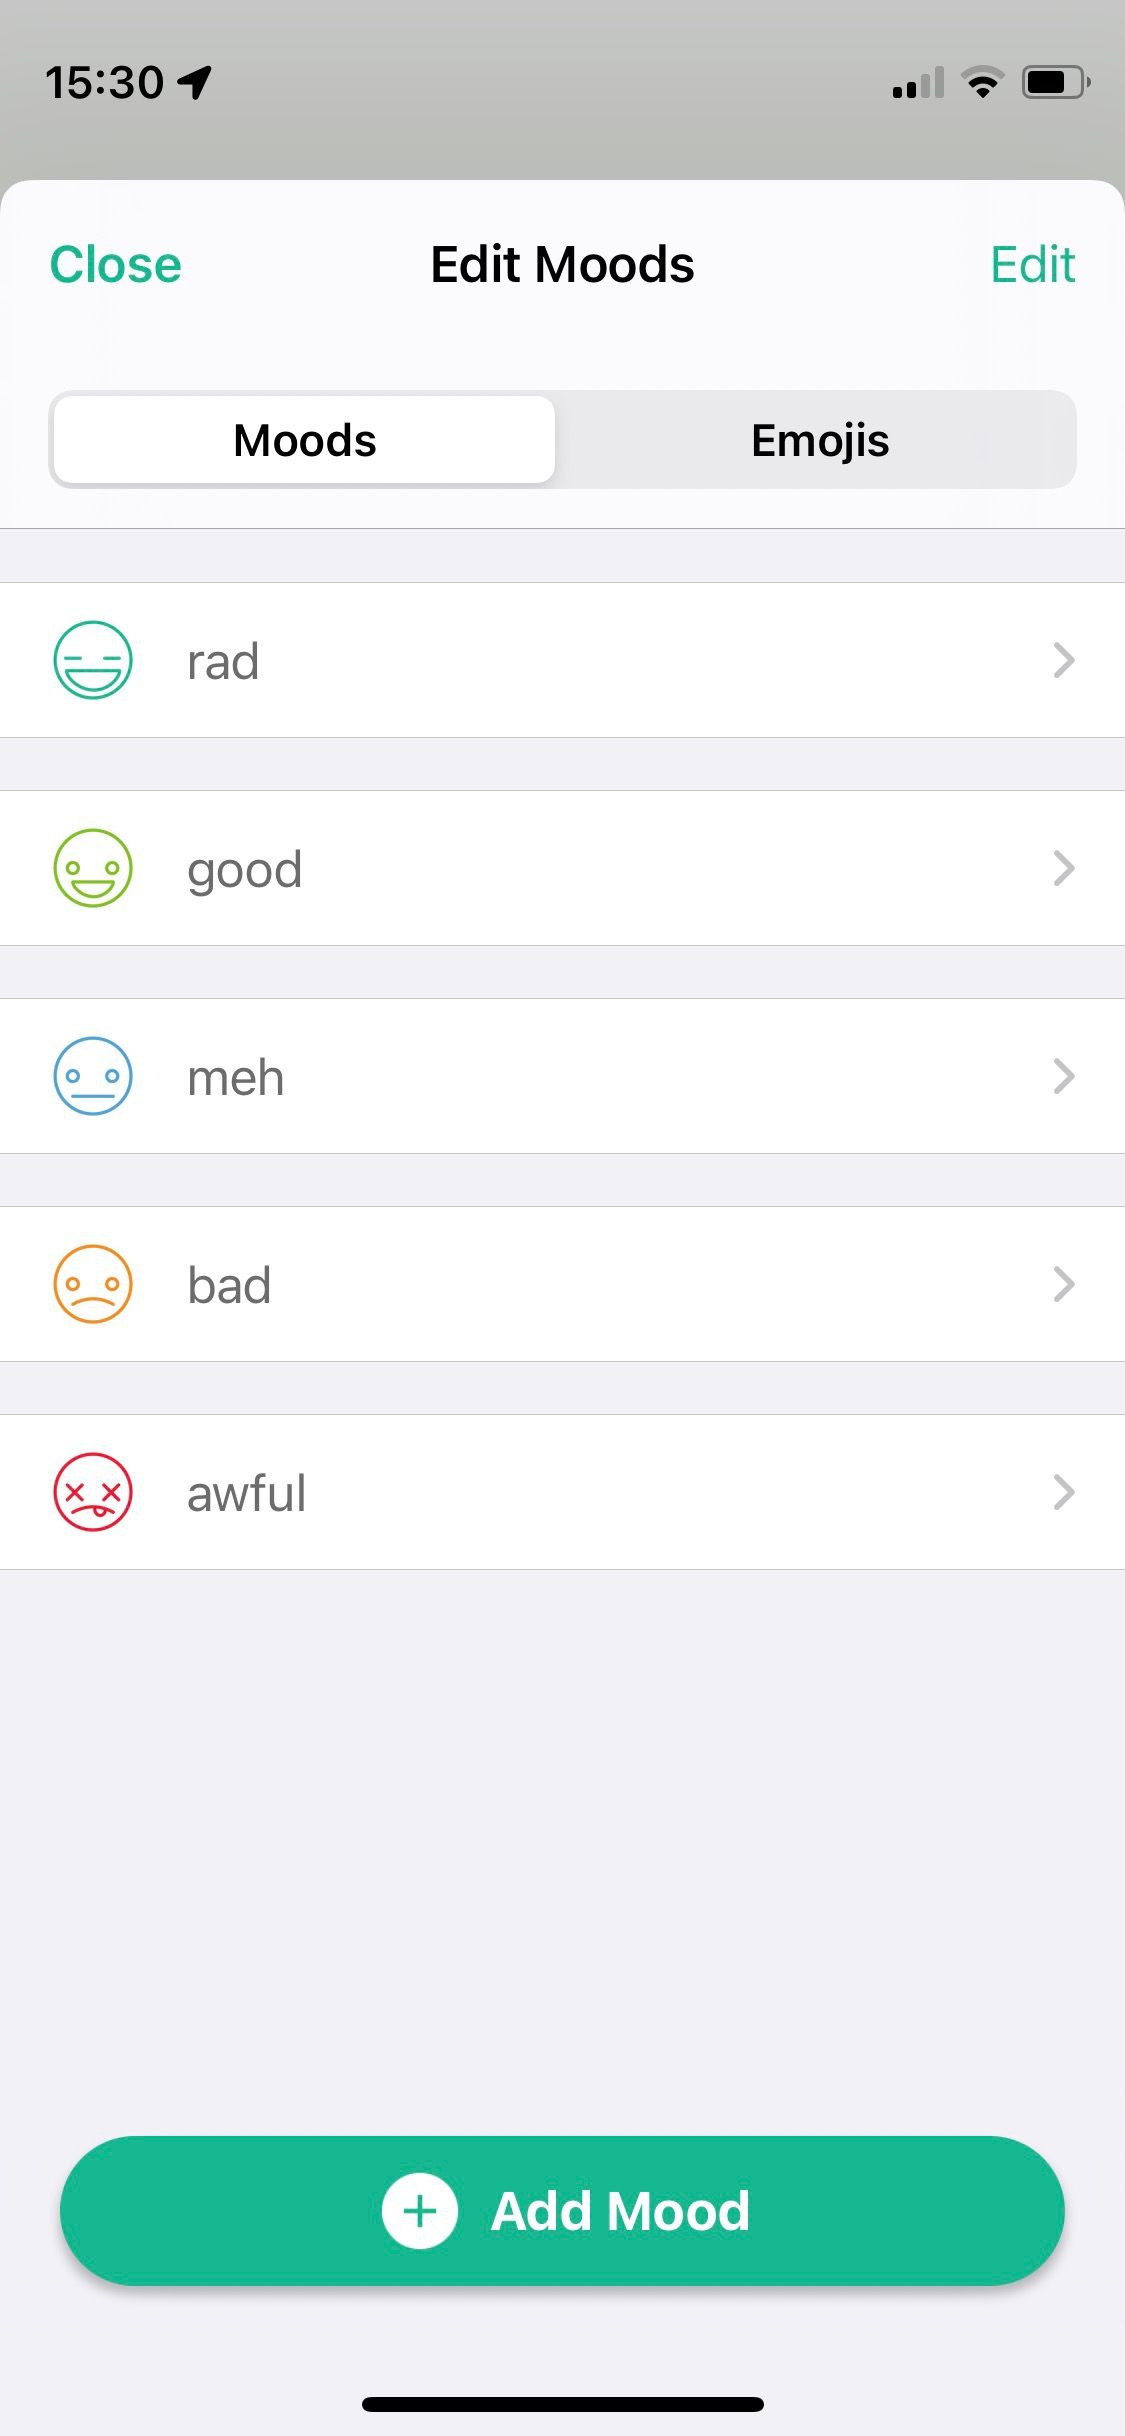 Screenshot of Daylio app showing mood edit screen